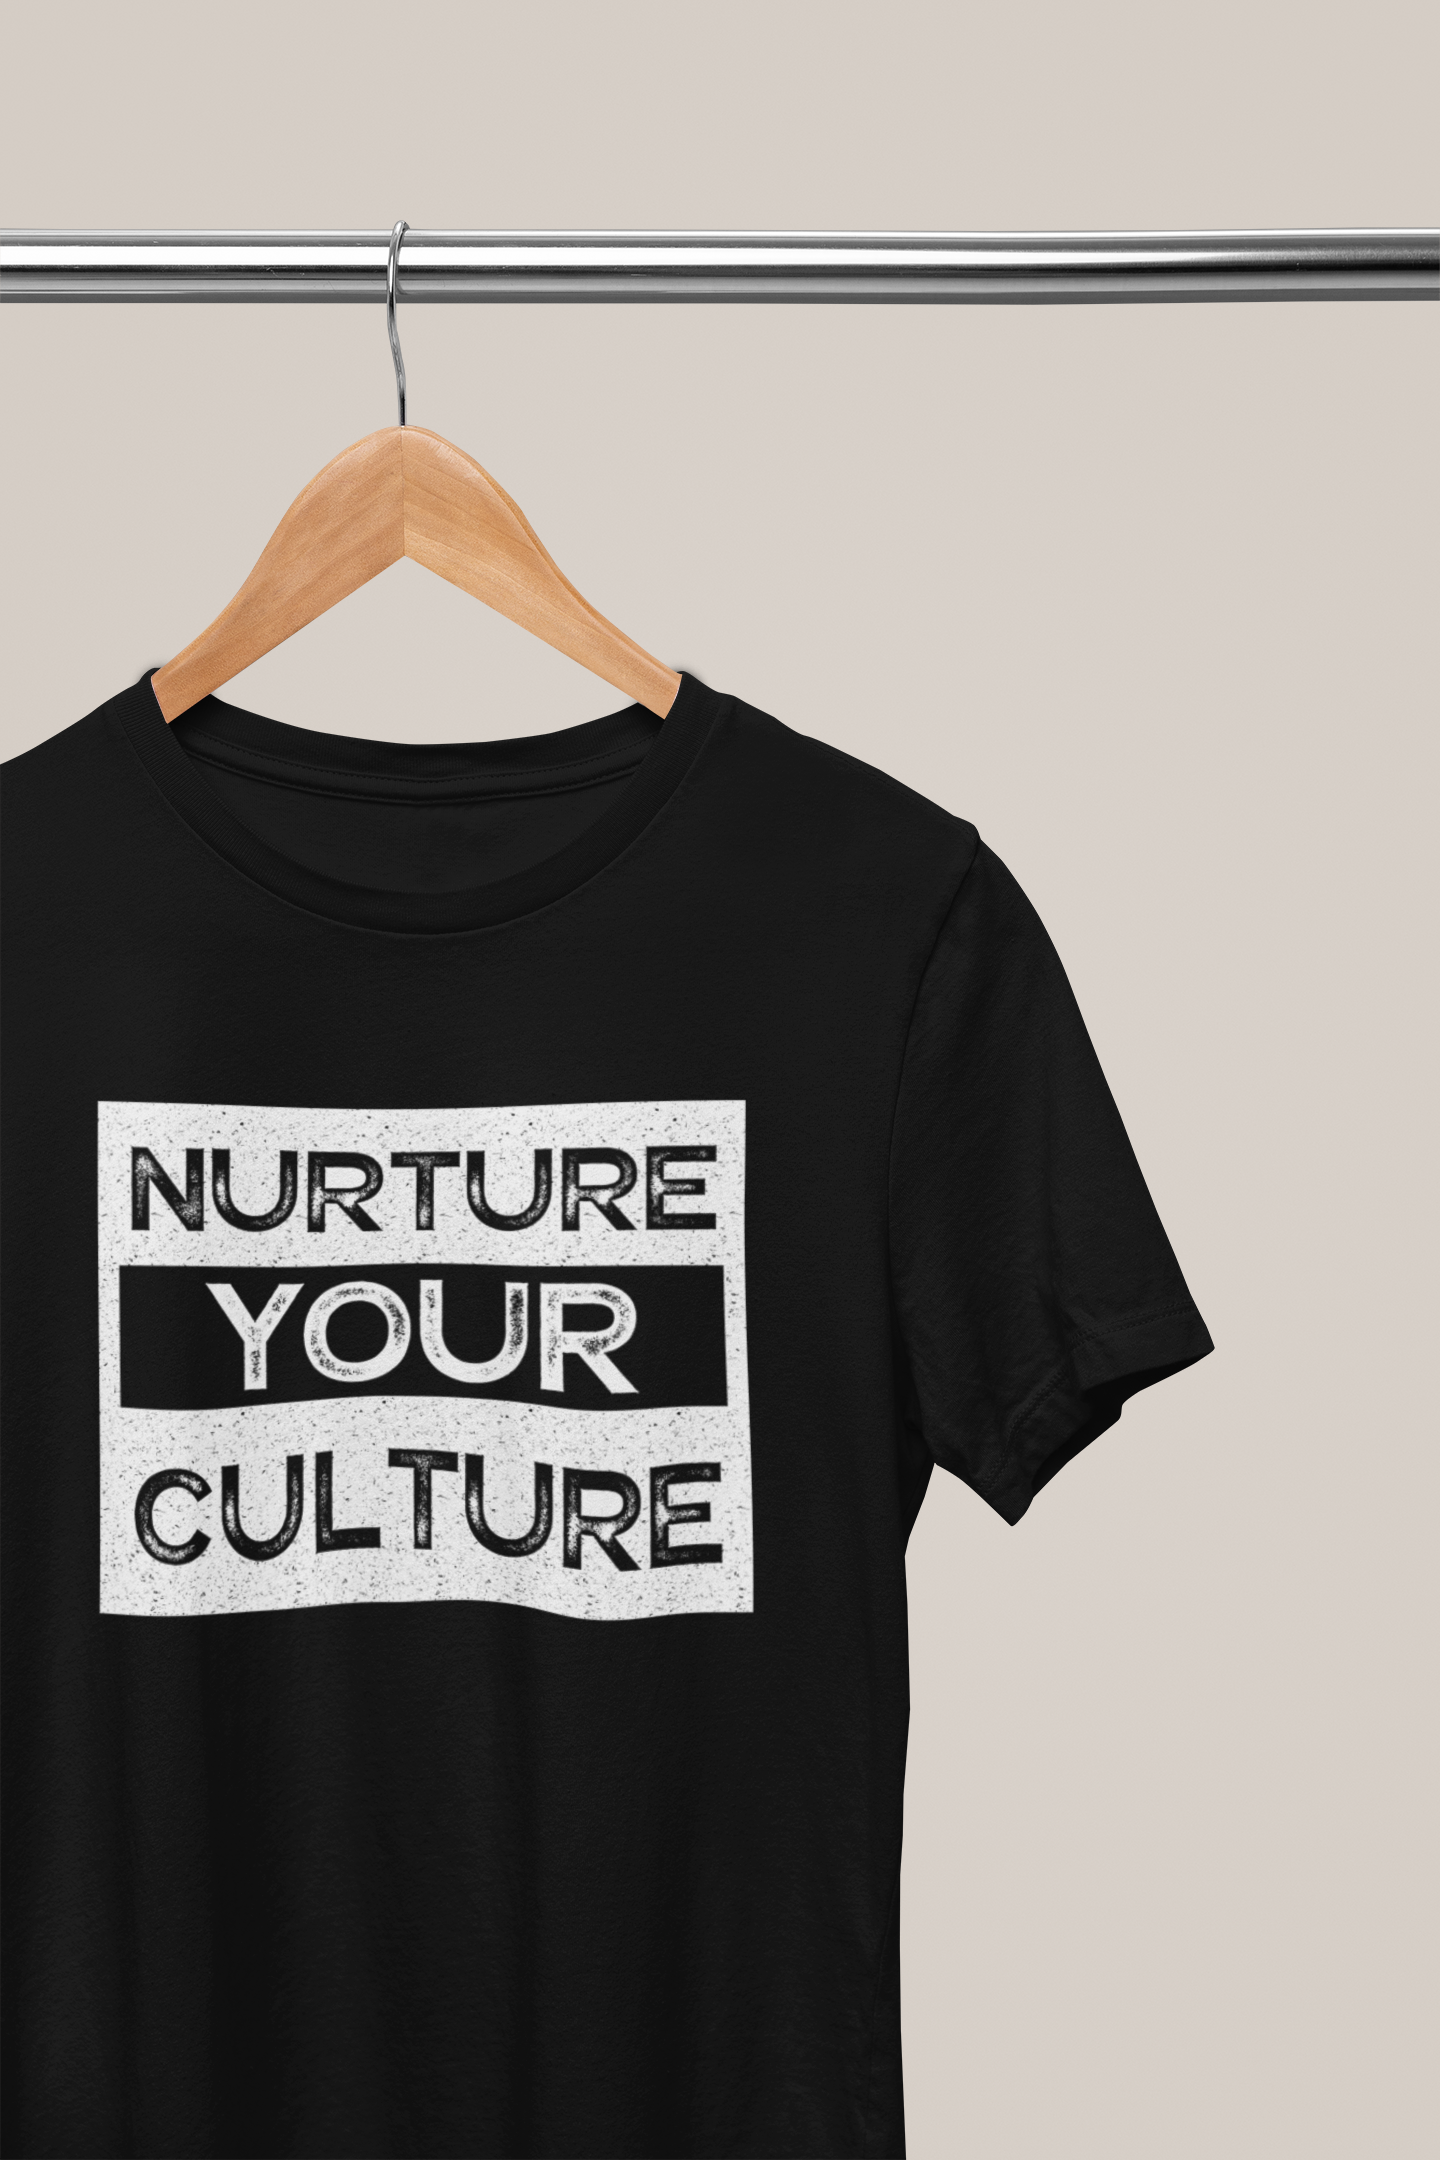 Nurture Your Culture, Hoodies, Sweatshirts, Tees, and Mugs